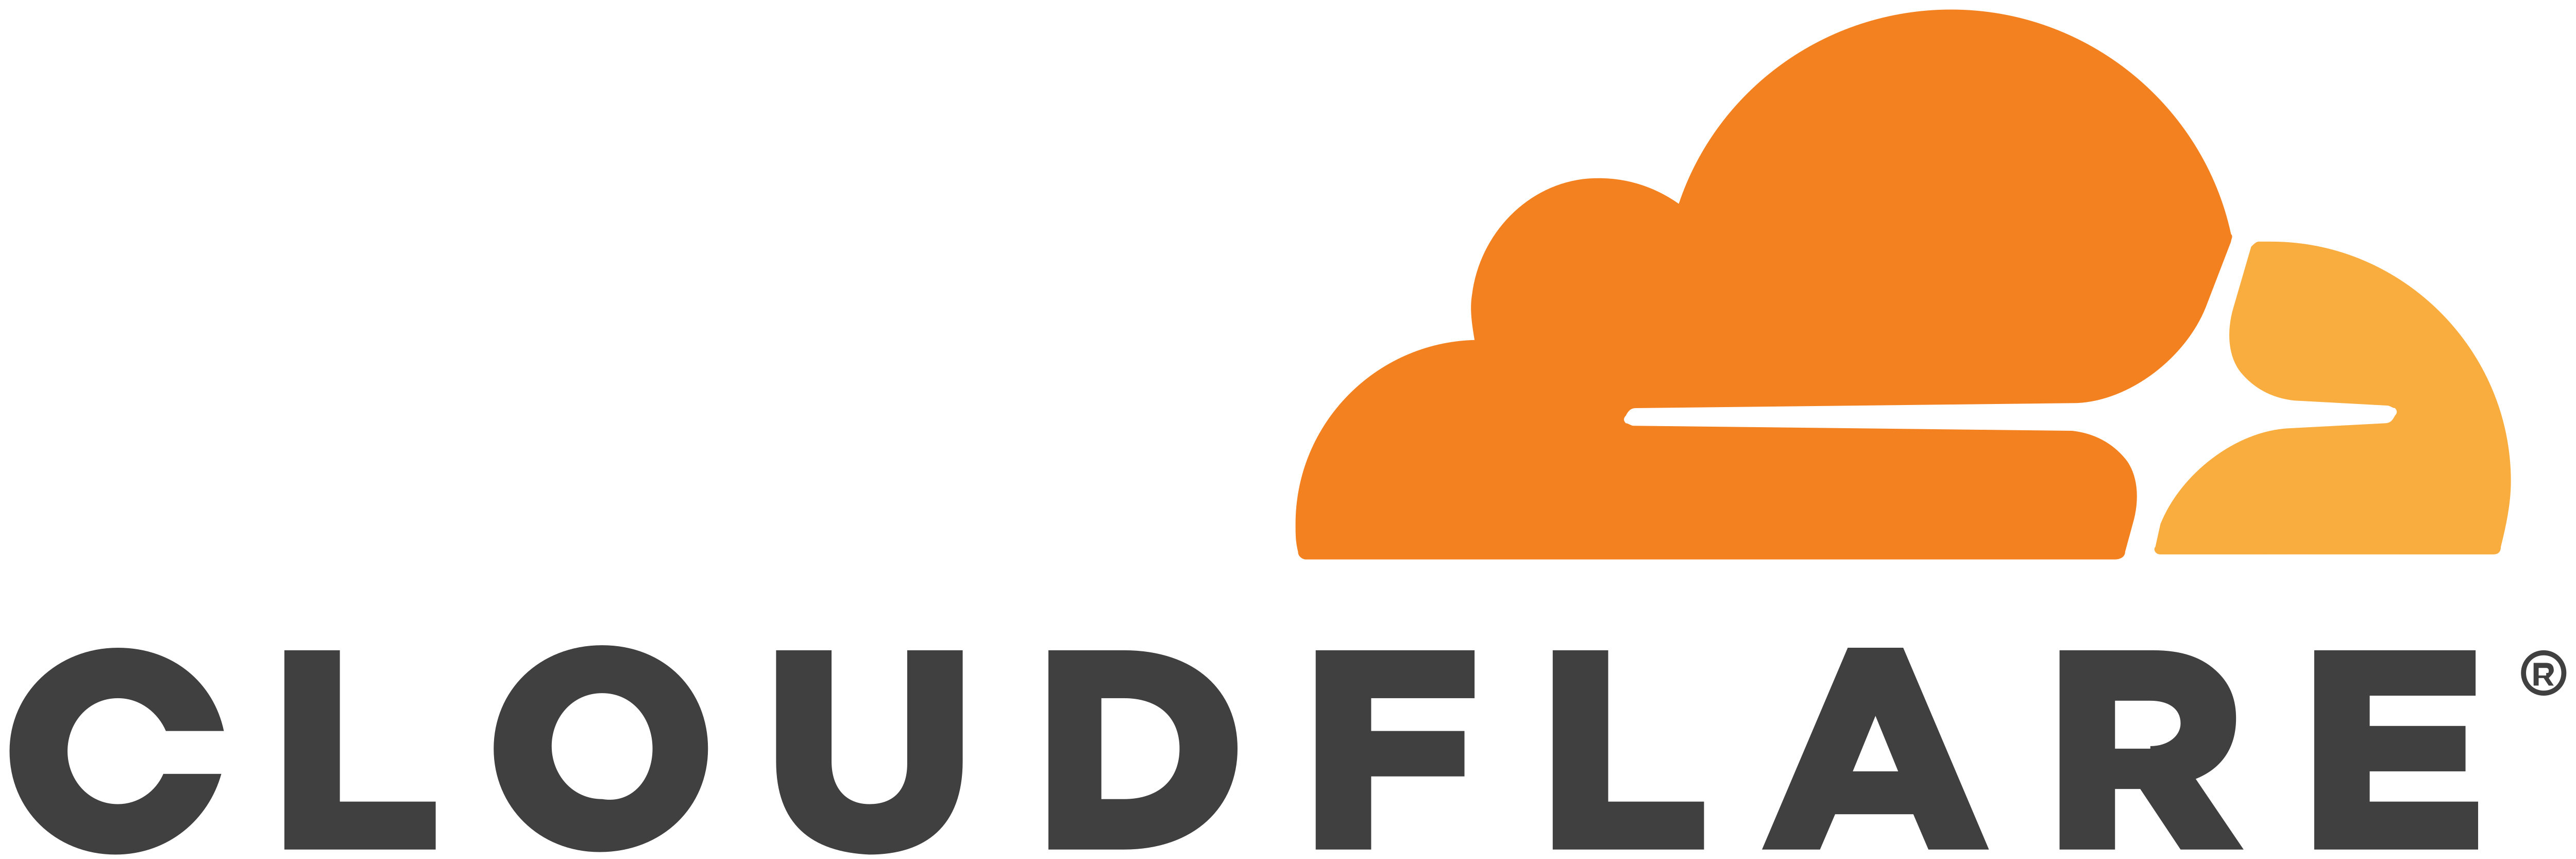 Orange Cloud Logo - Cloudflare Logo